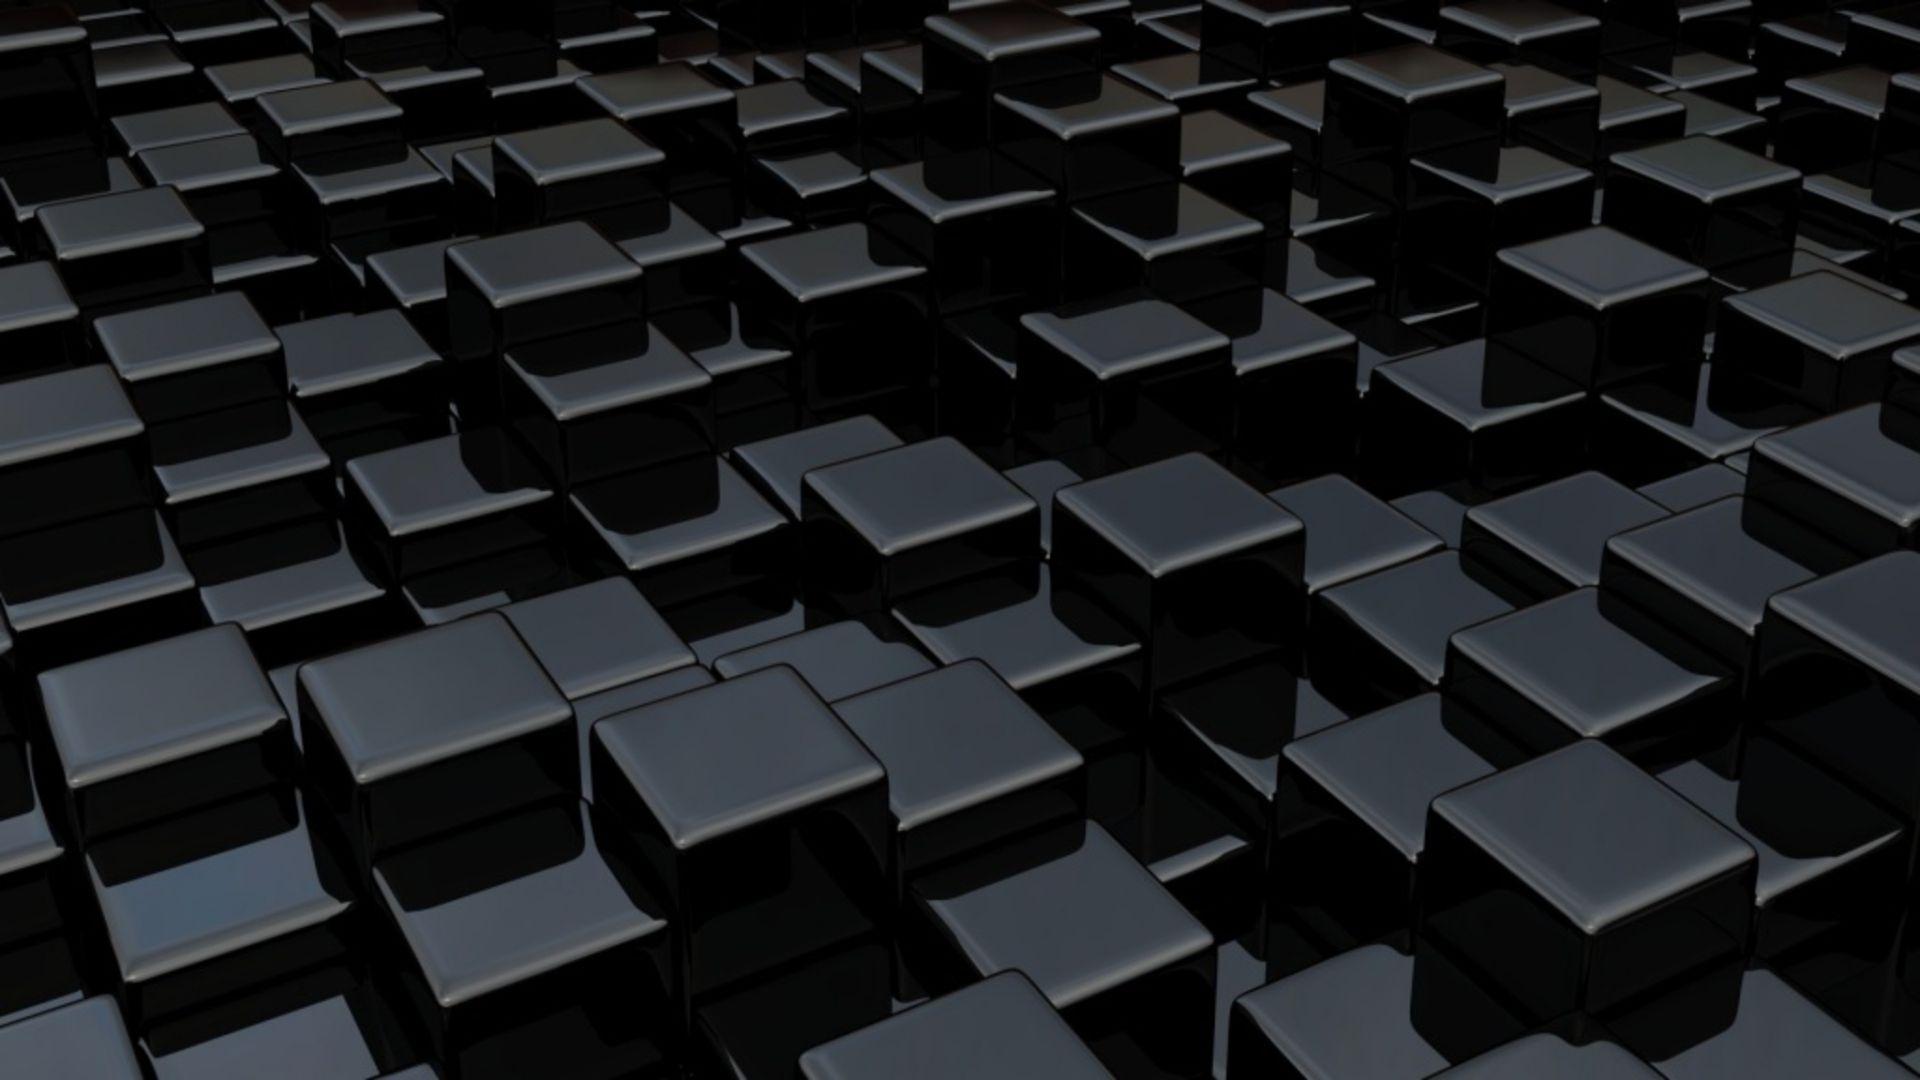 Black Cube HD Desktop Wallpaper, Instagram photo, Background Image